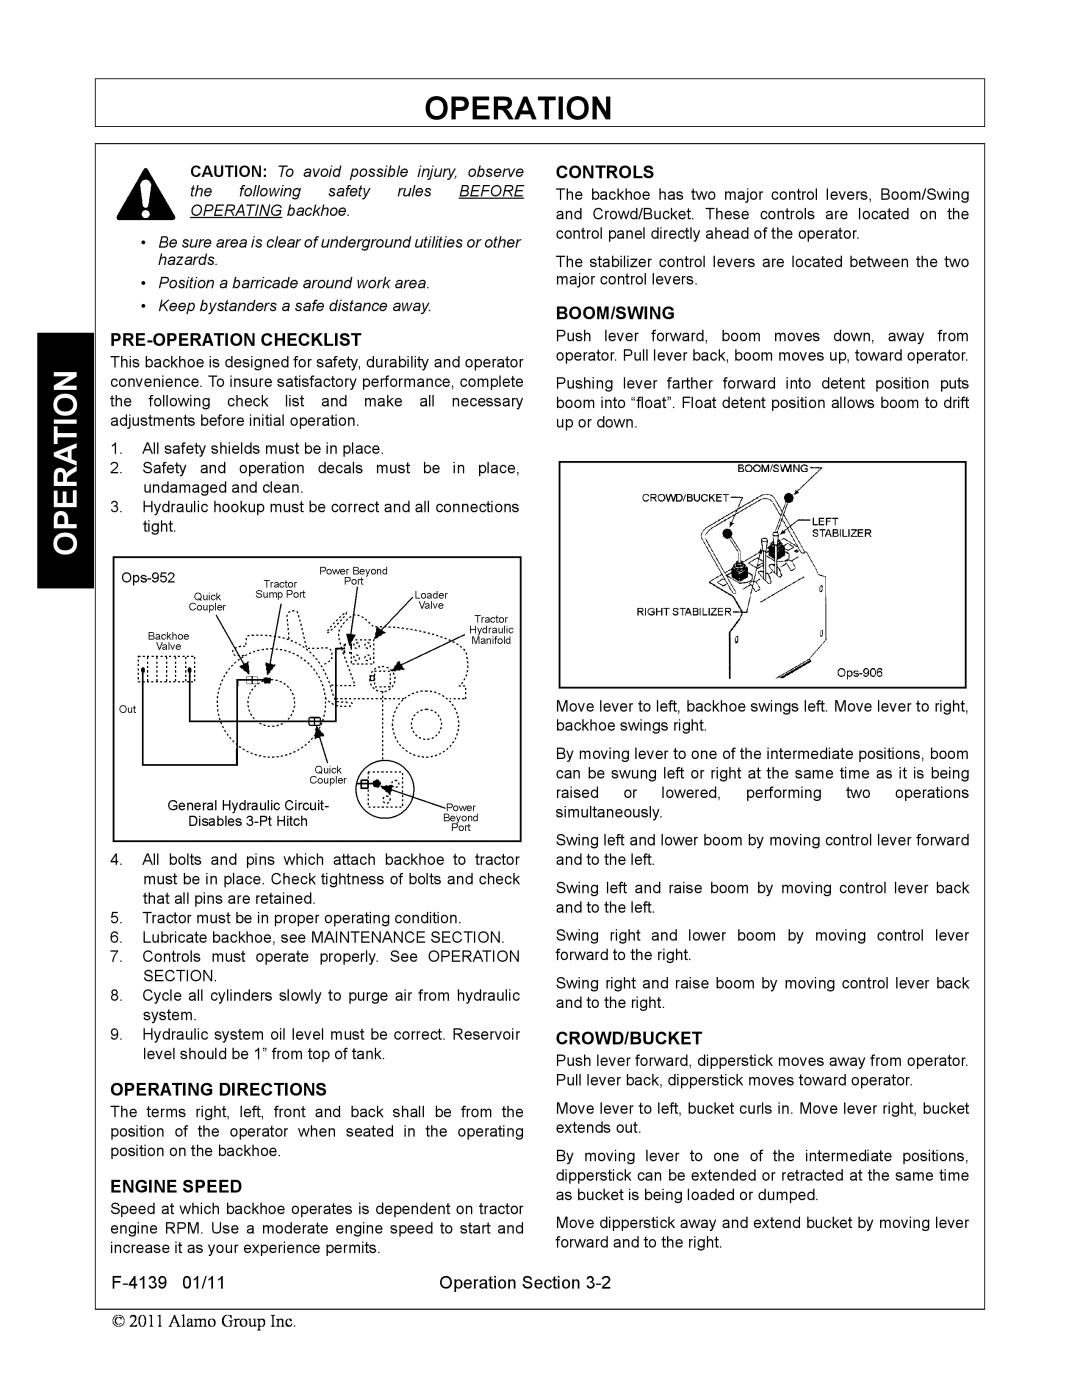 Servis-Rhino 60C manual Pre-Operationchecklist, Operating Directions, Engine Speed, Controls, Boom/Swing, Crowd/Bucket 